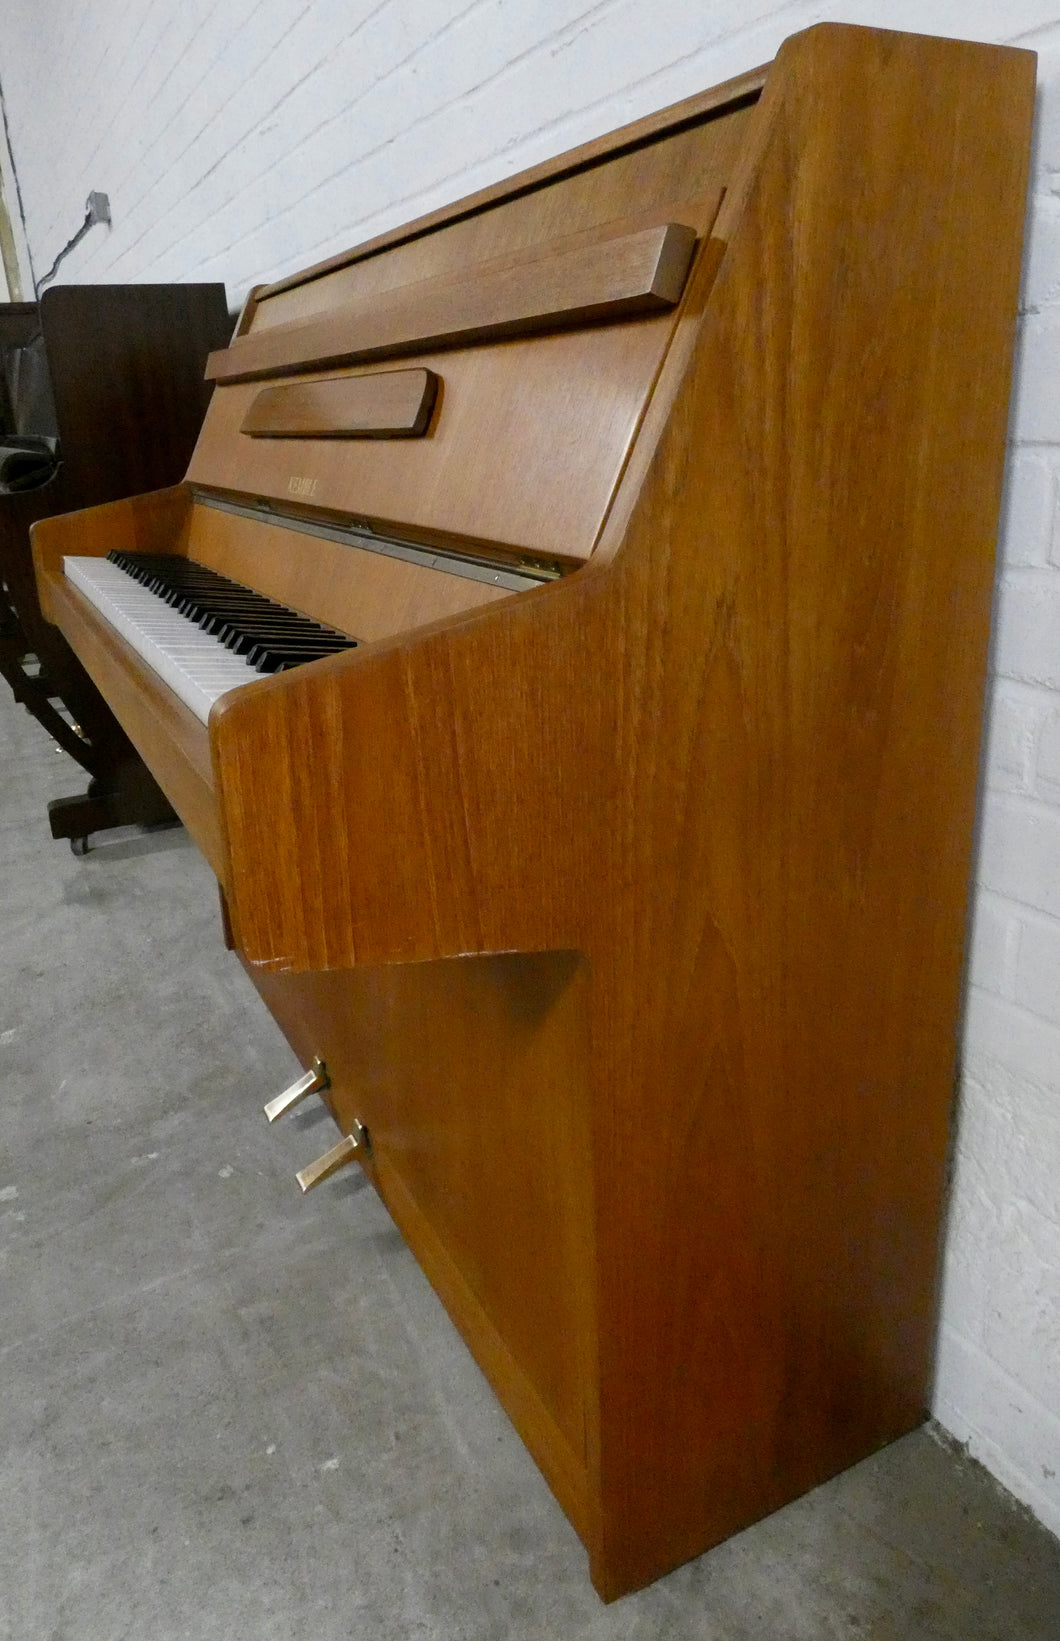 Kemble Rutland Upright Piano in Teak Cabinet